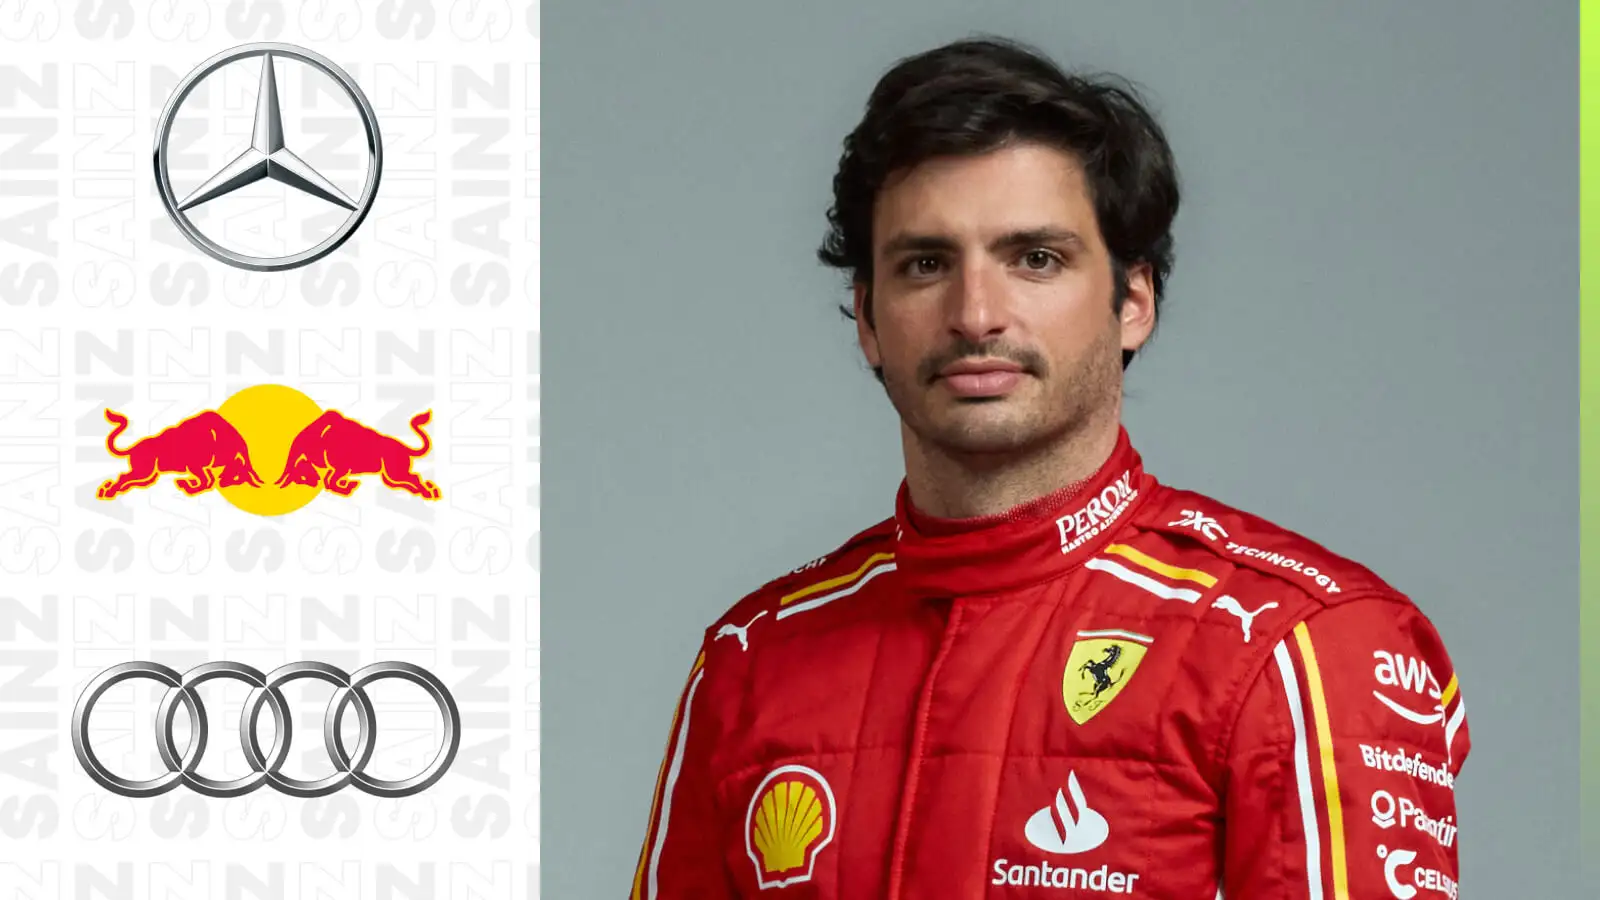 Where Will Carlos Sainz Go After Ferrari